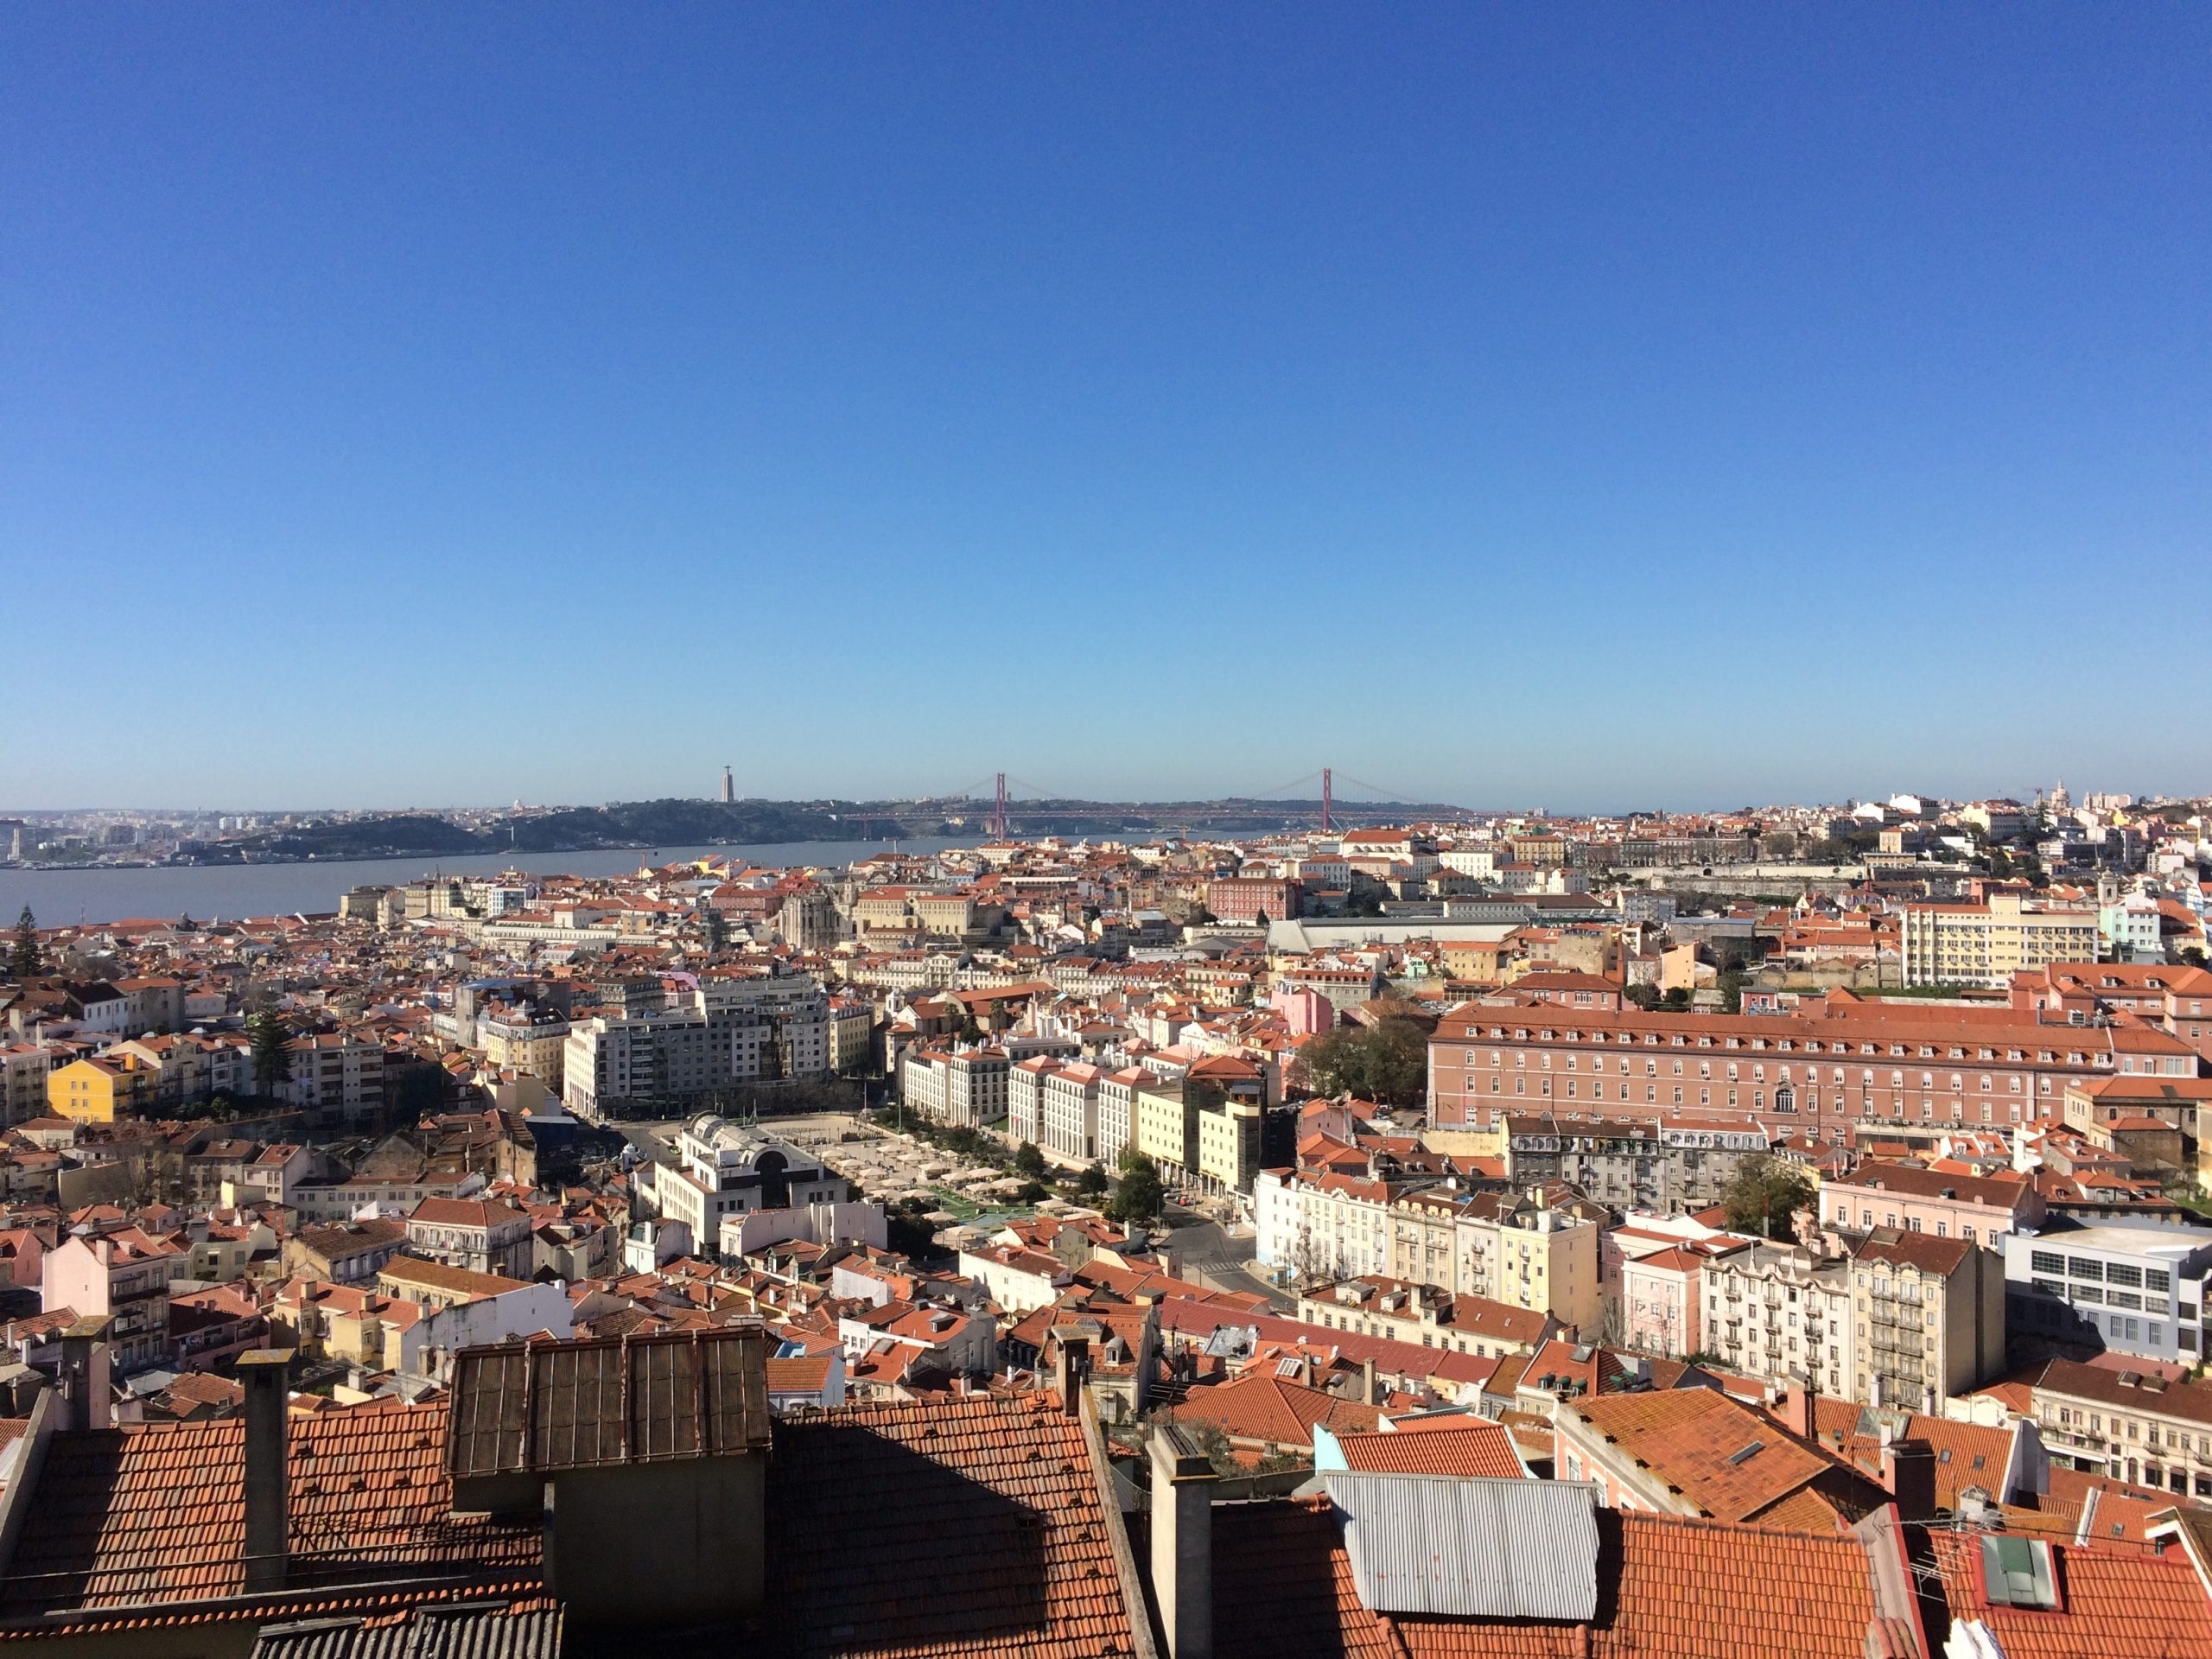 Lisbon, Portugal (Photo by WeSetupYourWebViewApp on Unsplash)